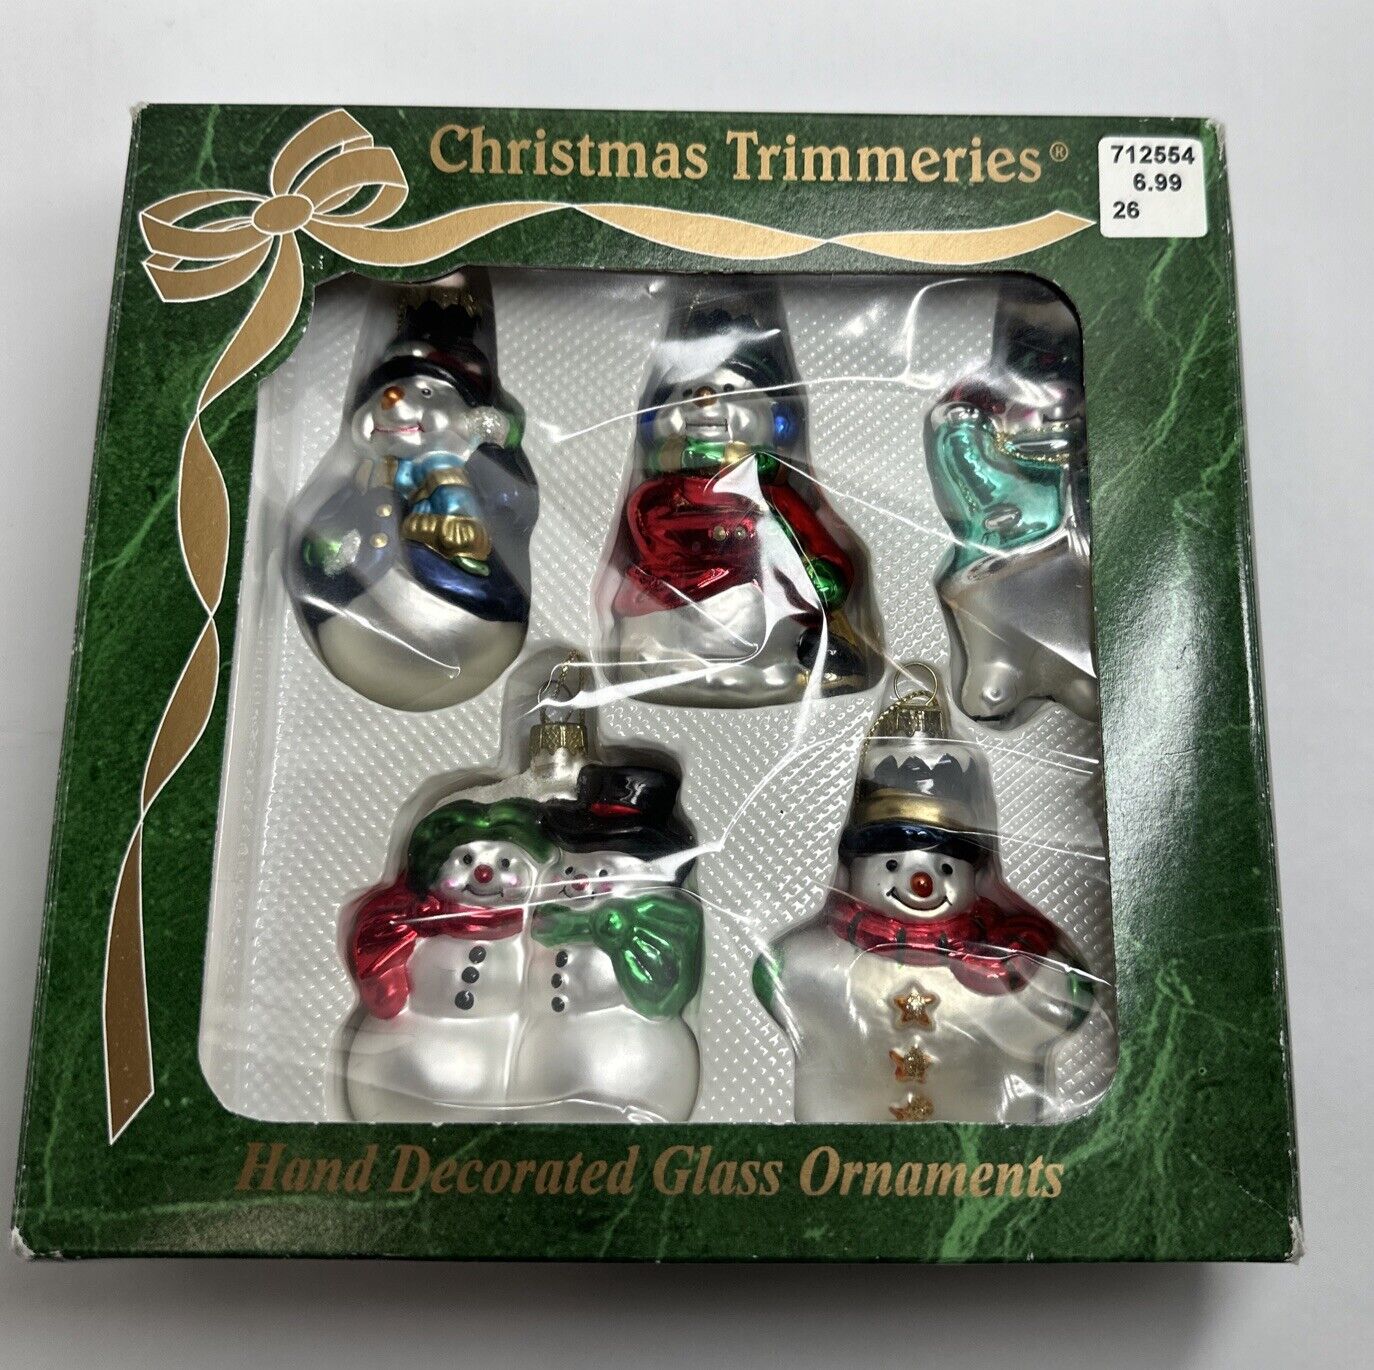 Ornaments Five Snowman Original Box  1997 Glass Christmas Snowman Hand Decorated